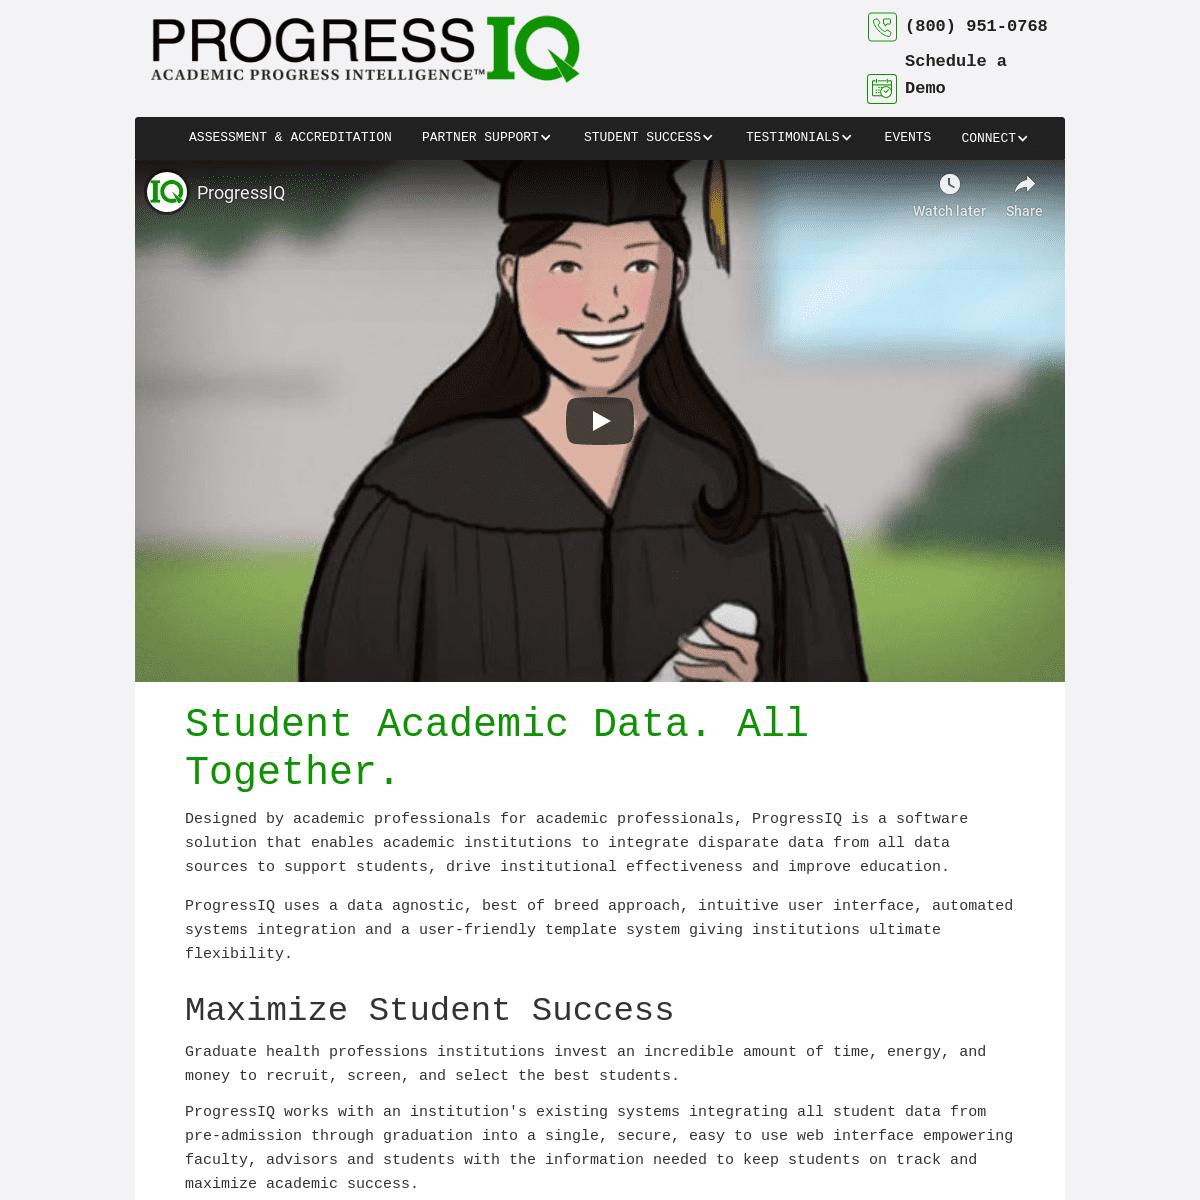 A complete backup of progressiq.com